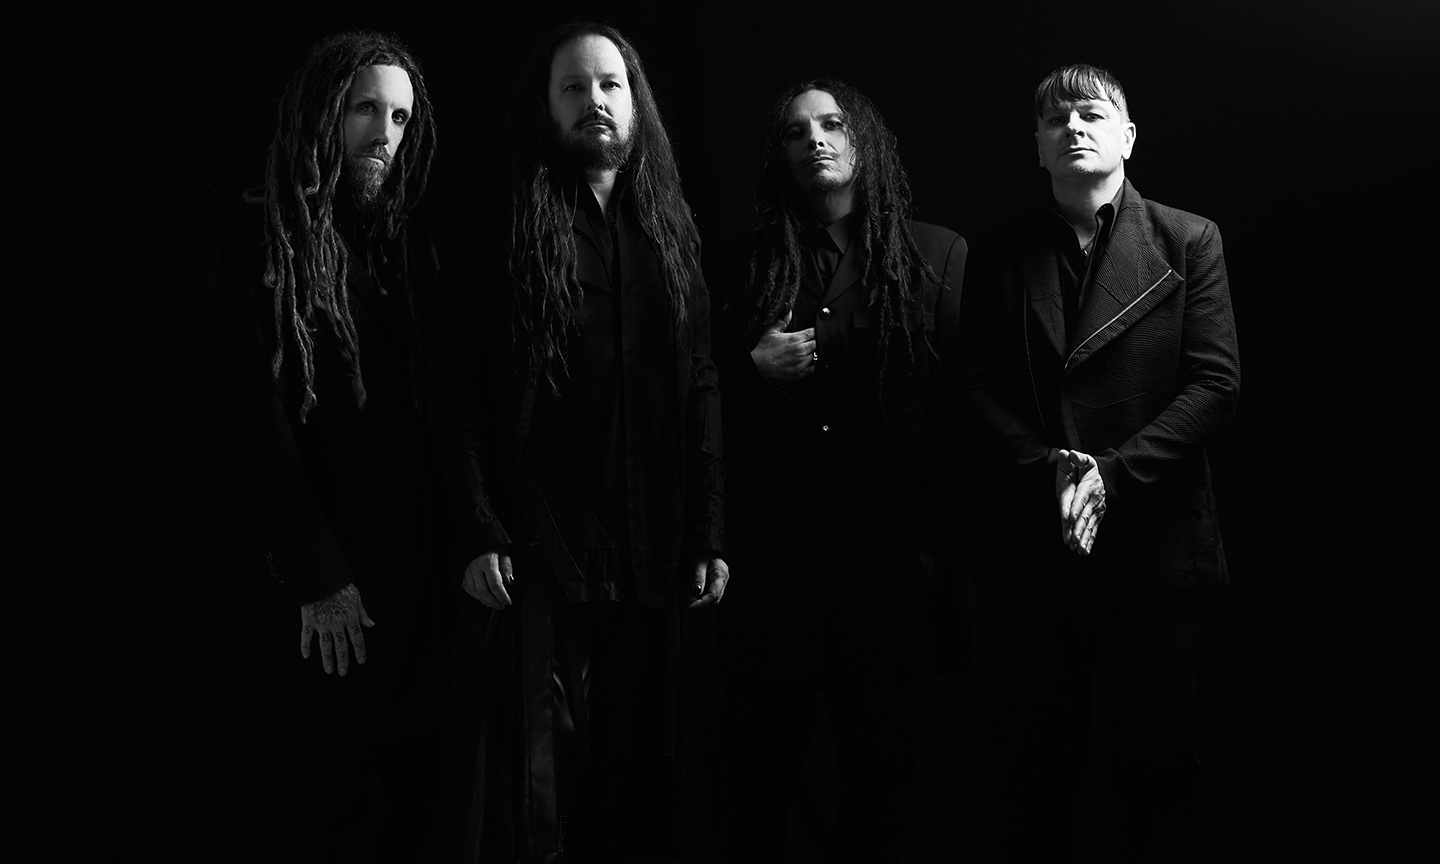 Requiem – Álbum de Korn